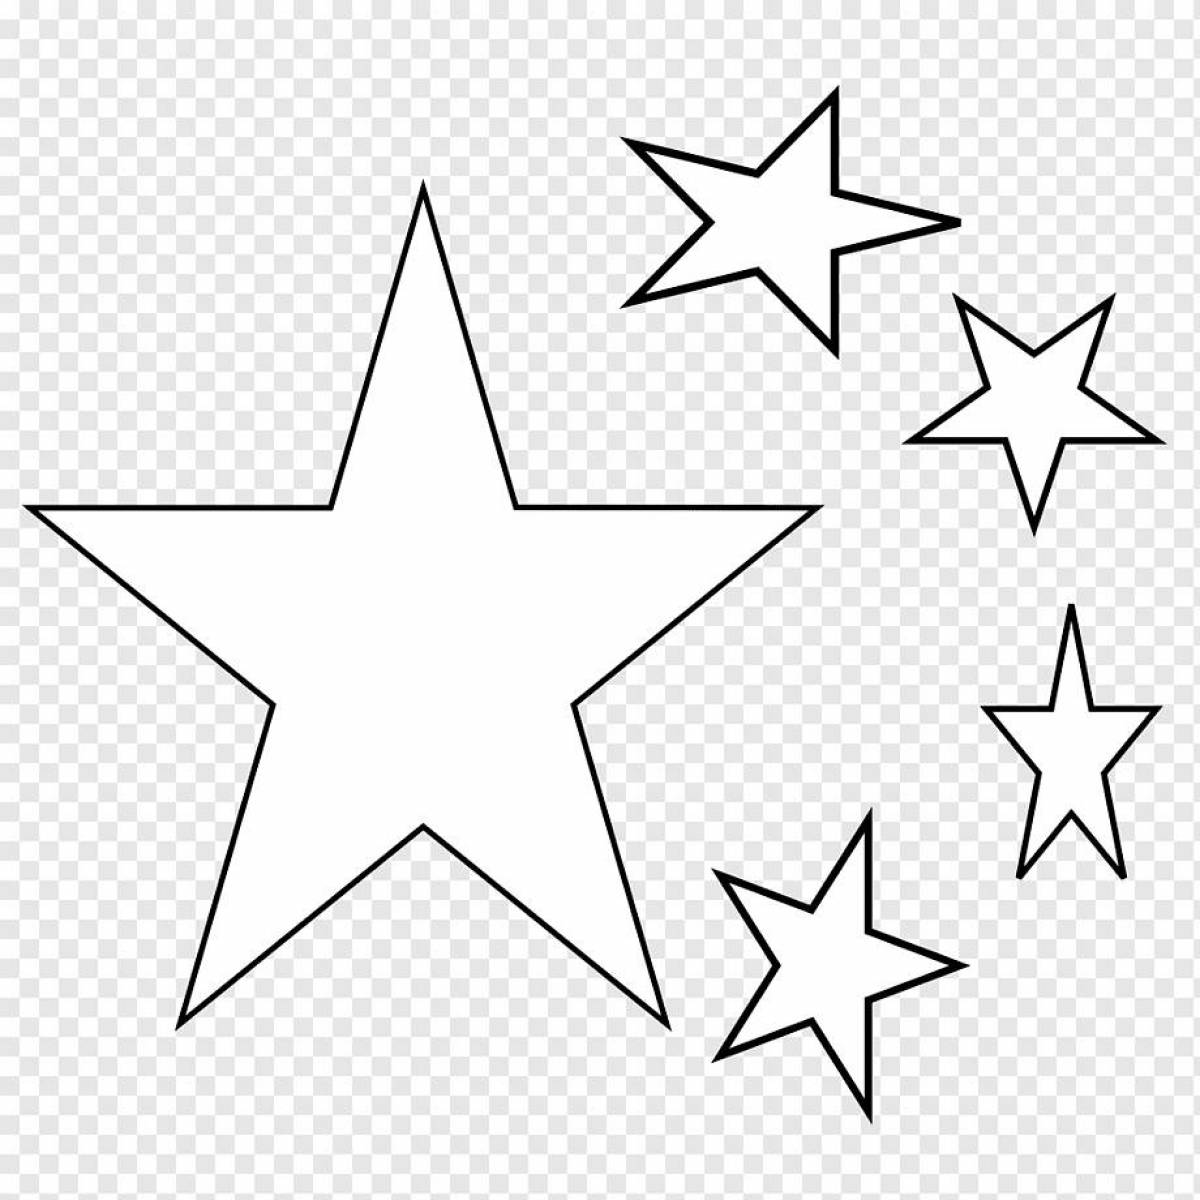 Elegant star pattern coloring page